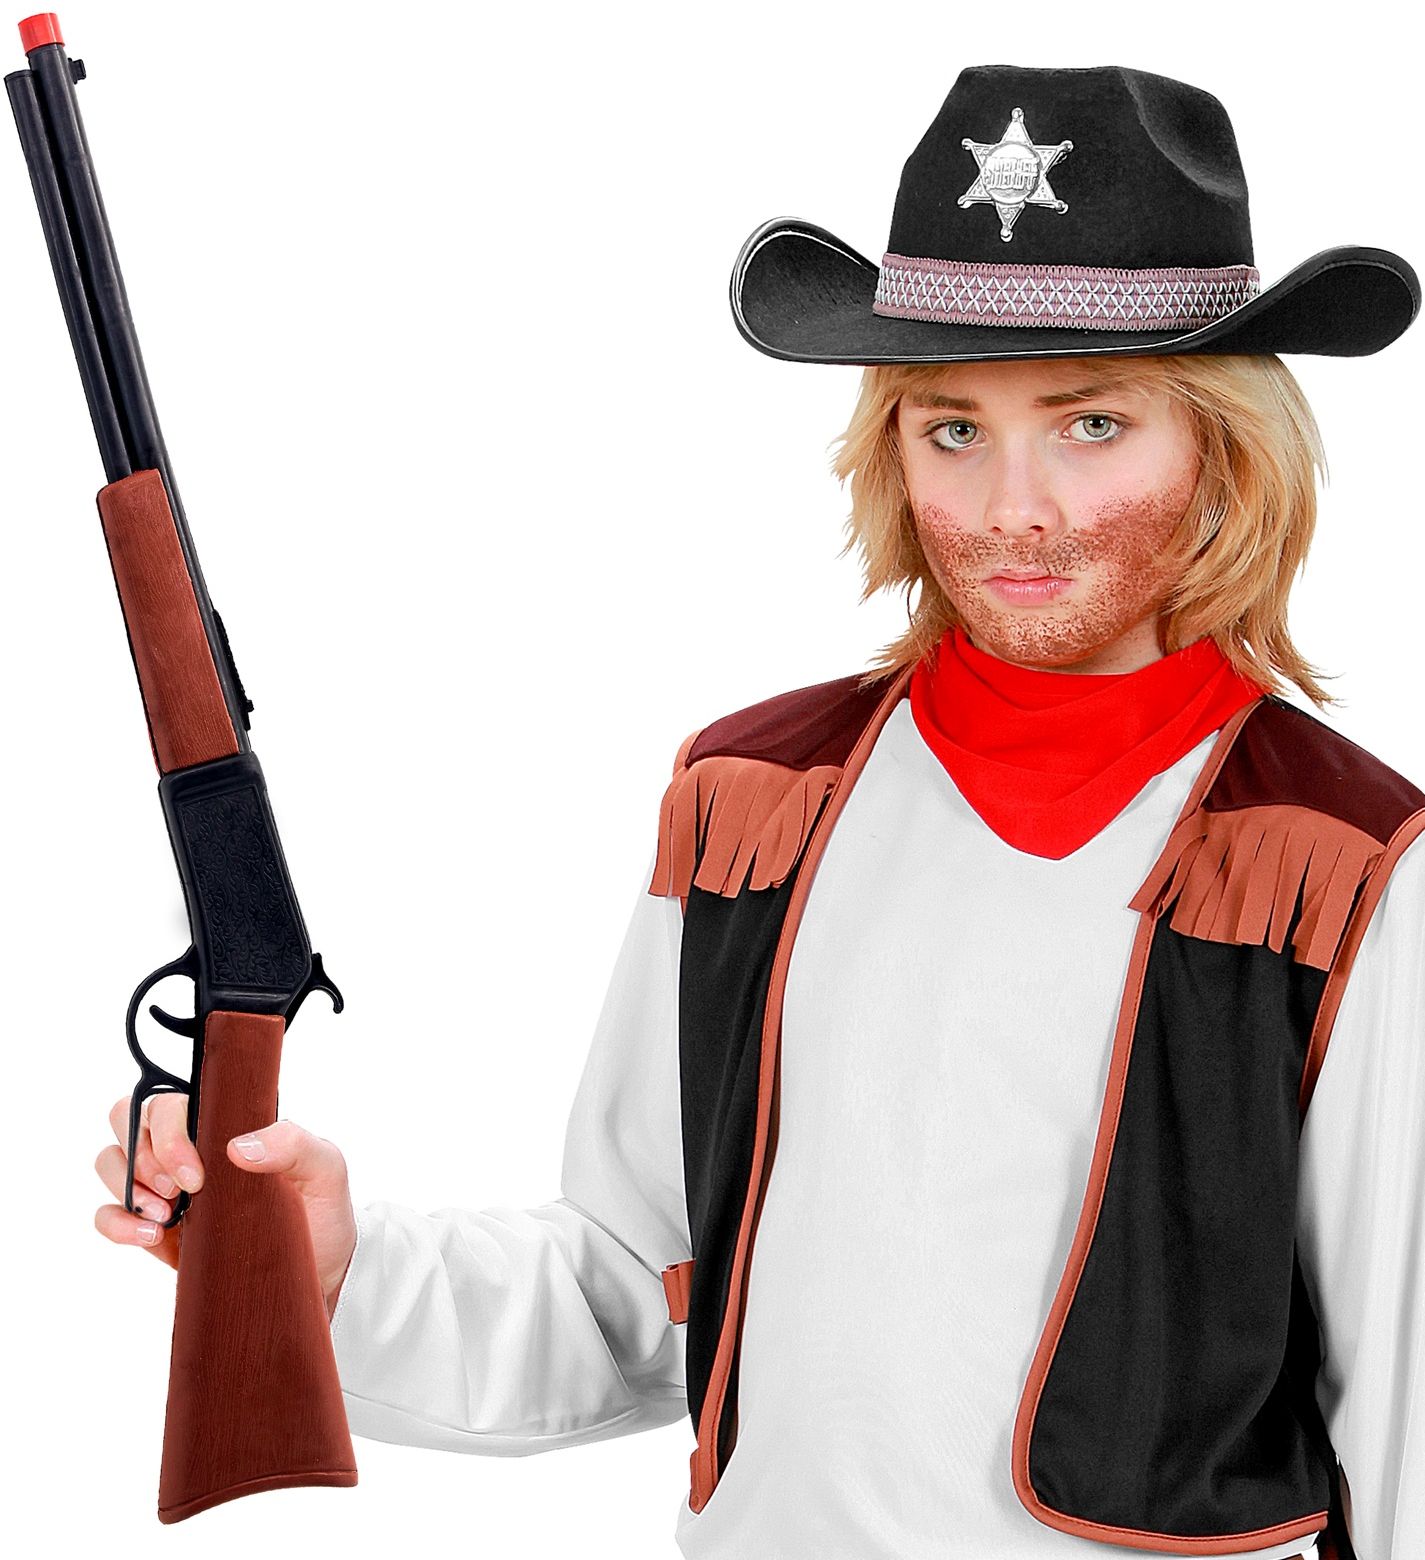 Cowboy shotgun